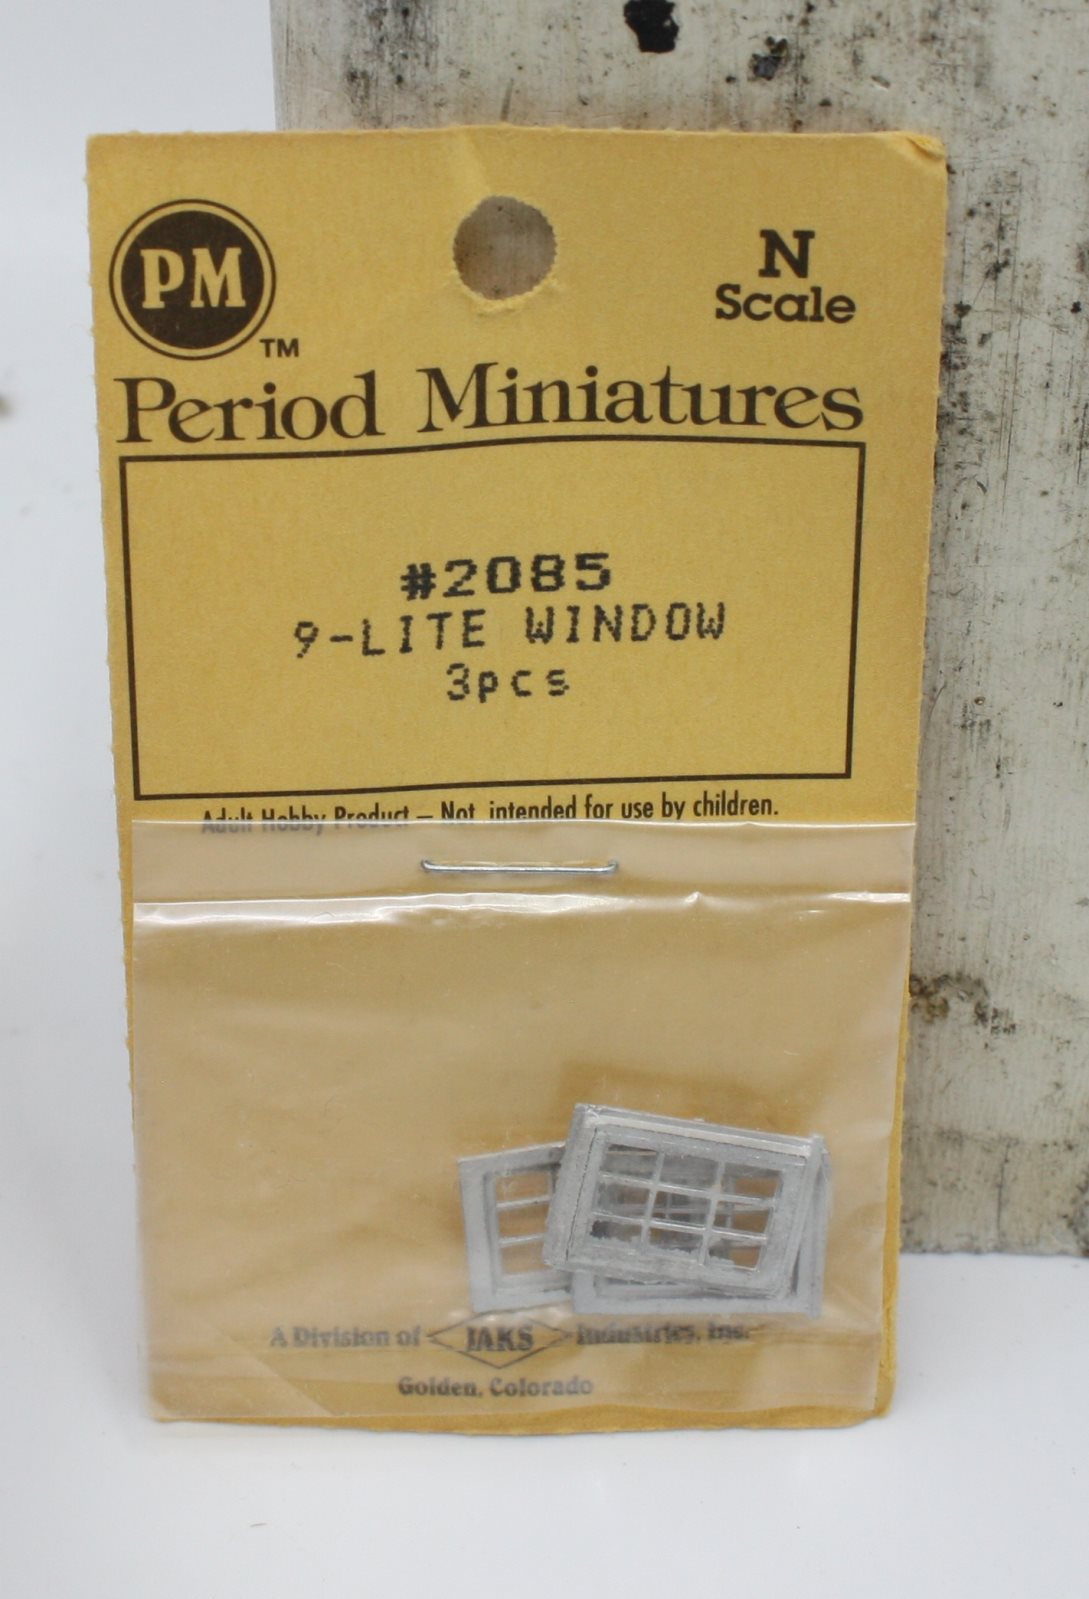 Period Miniatures 2085 N Scale 9 - Lite Window